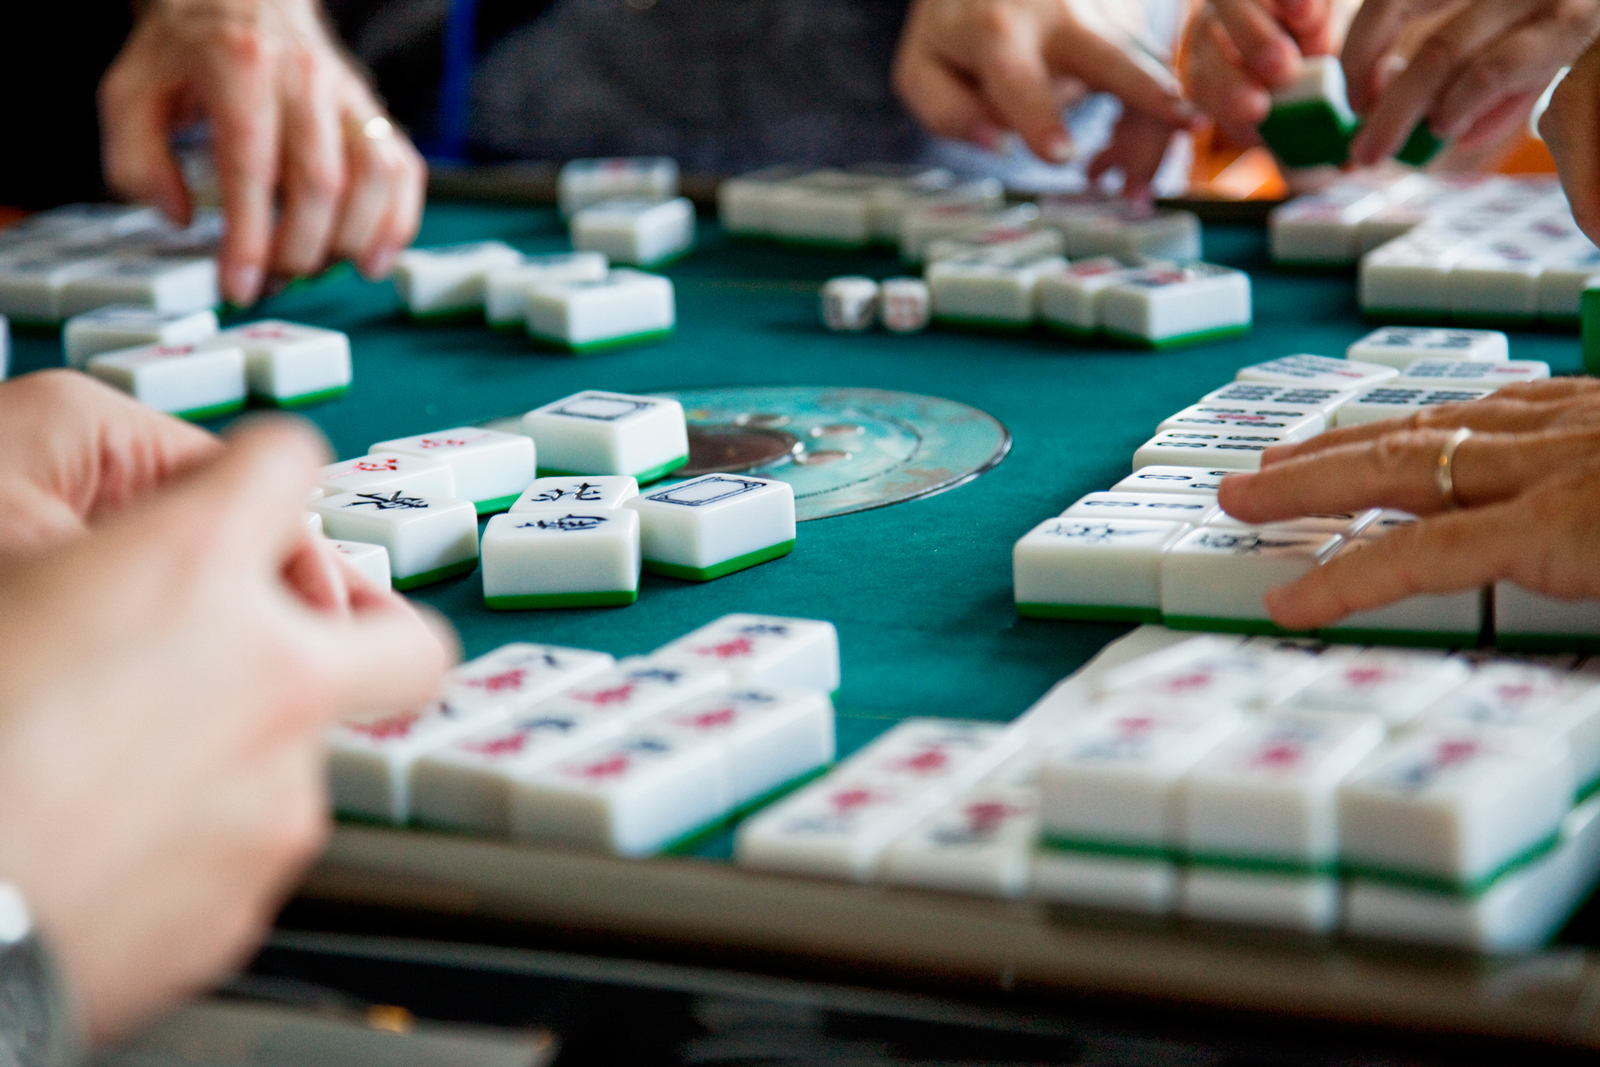 Mahjong players at game table